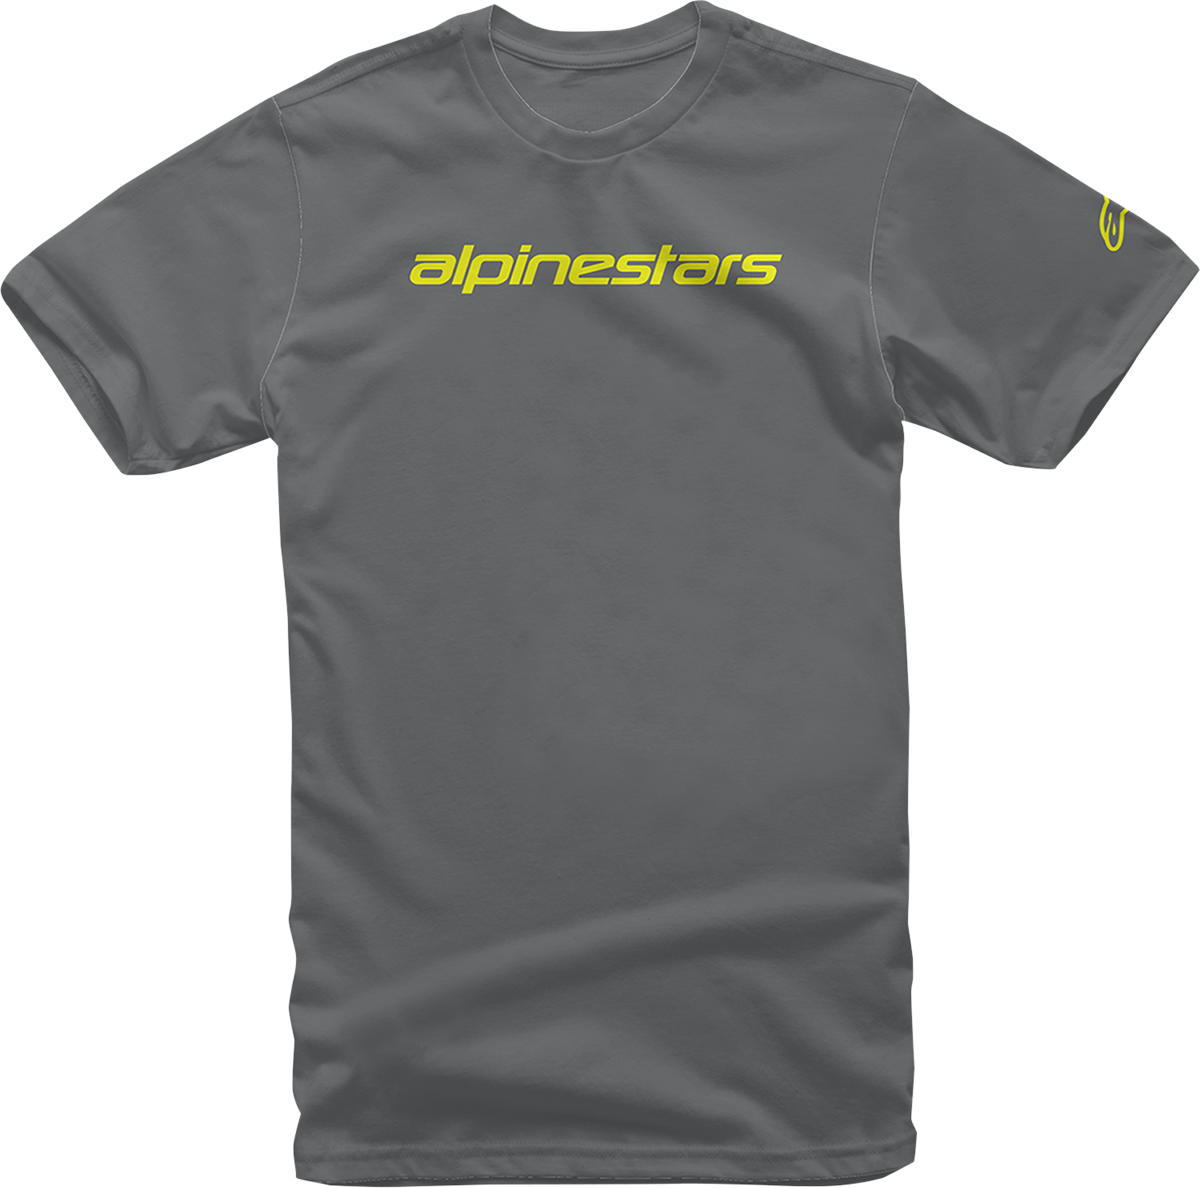 ALPINESTARS Linear Wordmark T-Shirt - Charcoal/Fluorescent Yellow - 2XL 12127202018522X